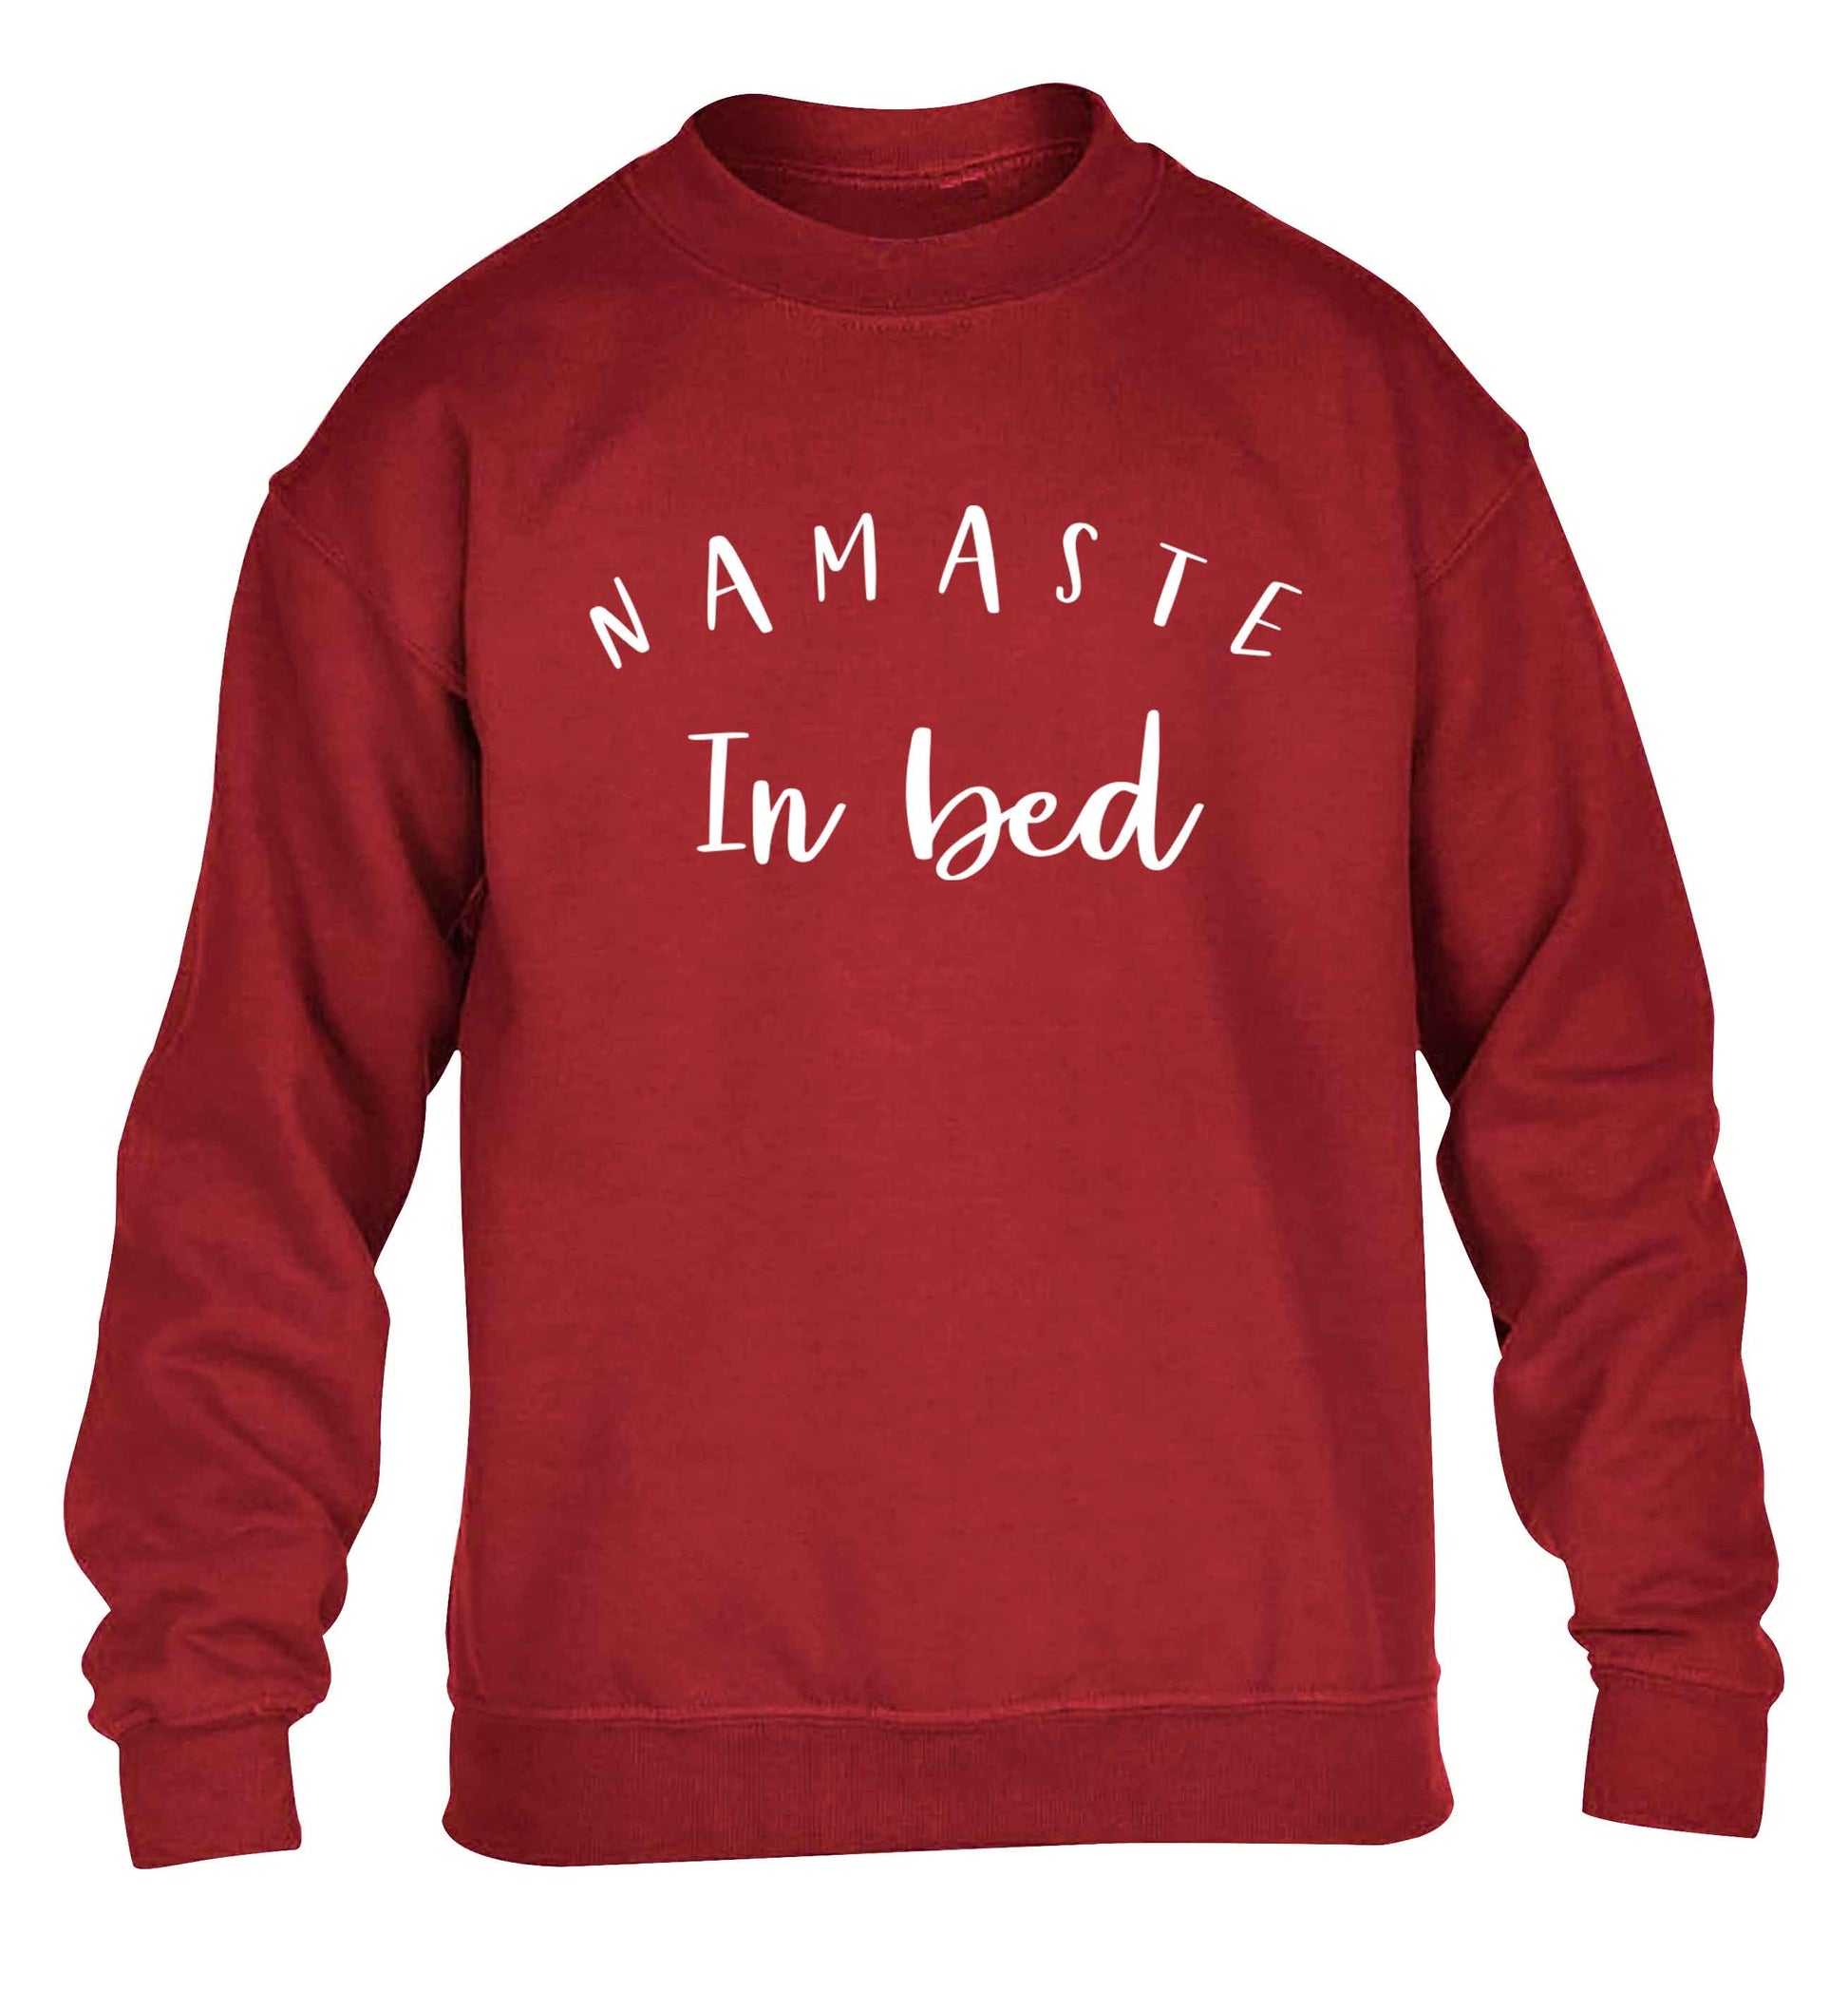 Namaste in bed children's grey sweater 12-13 Years